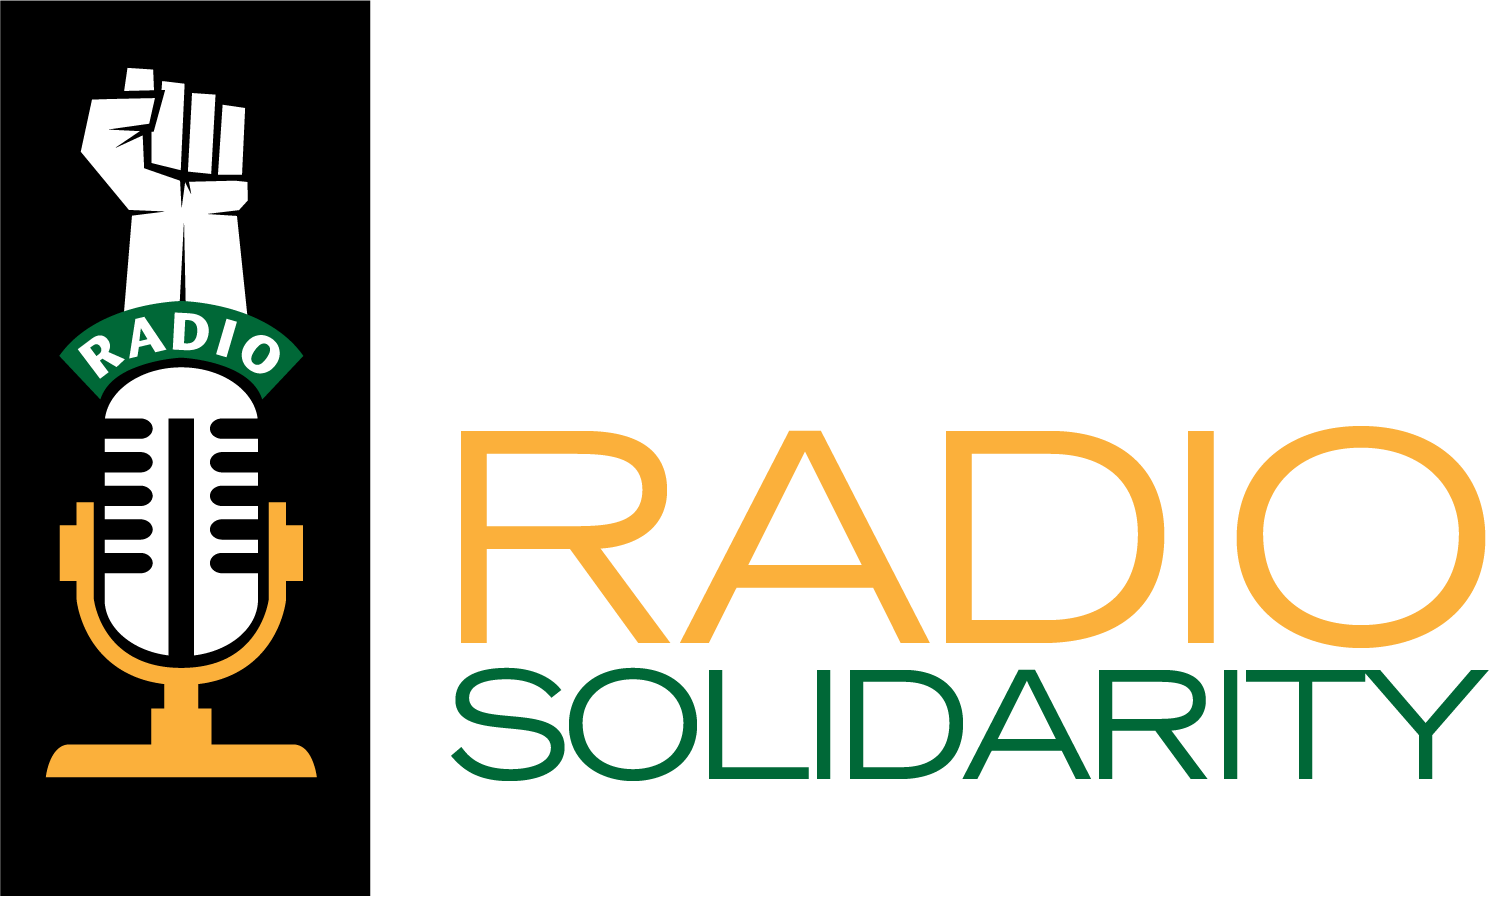 BlackRadioSolidarity.com